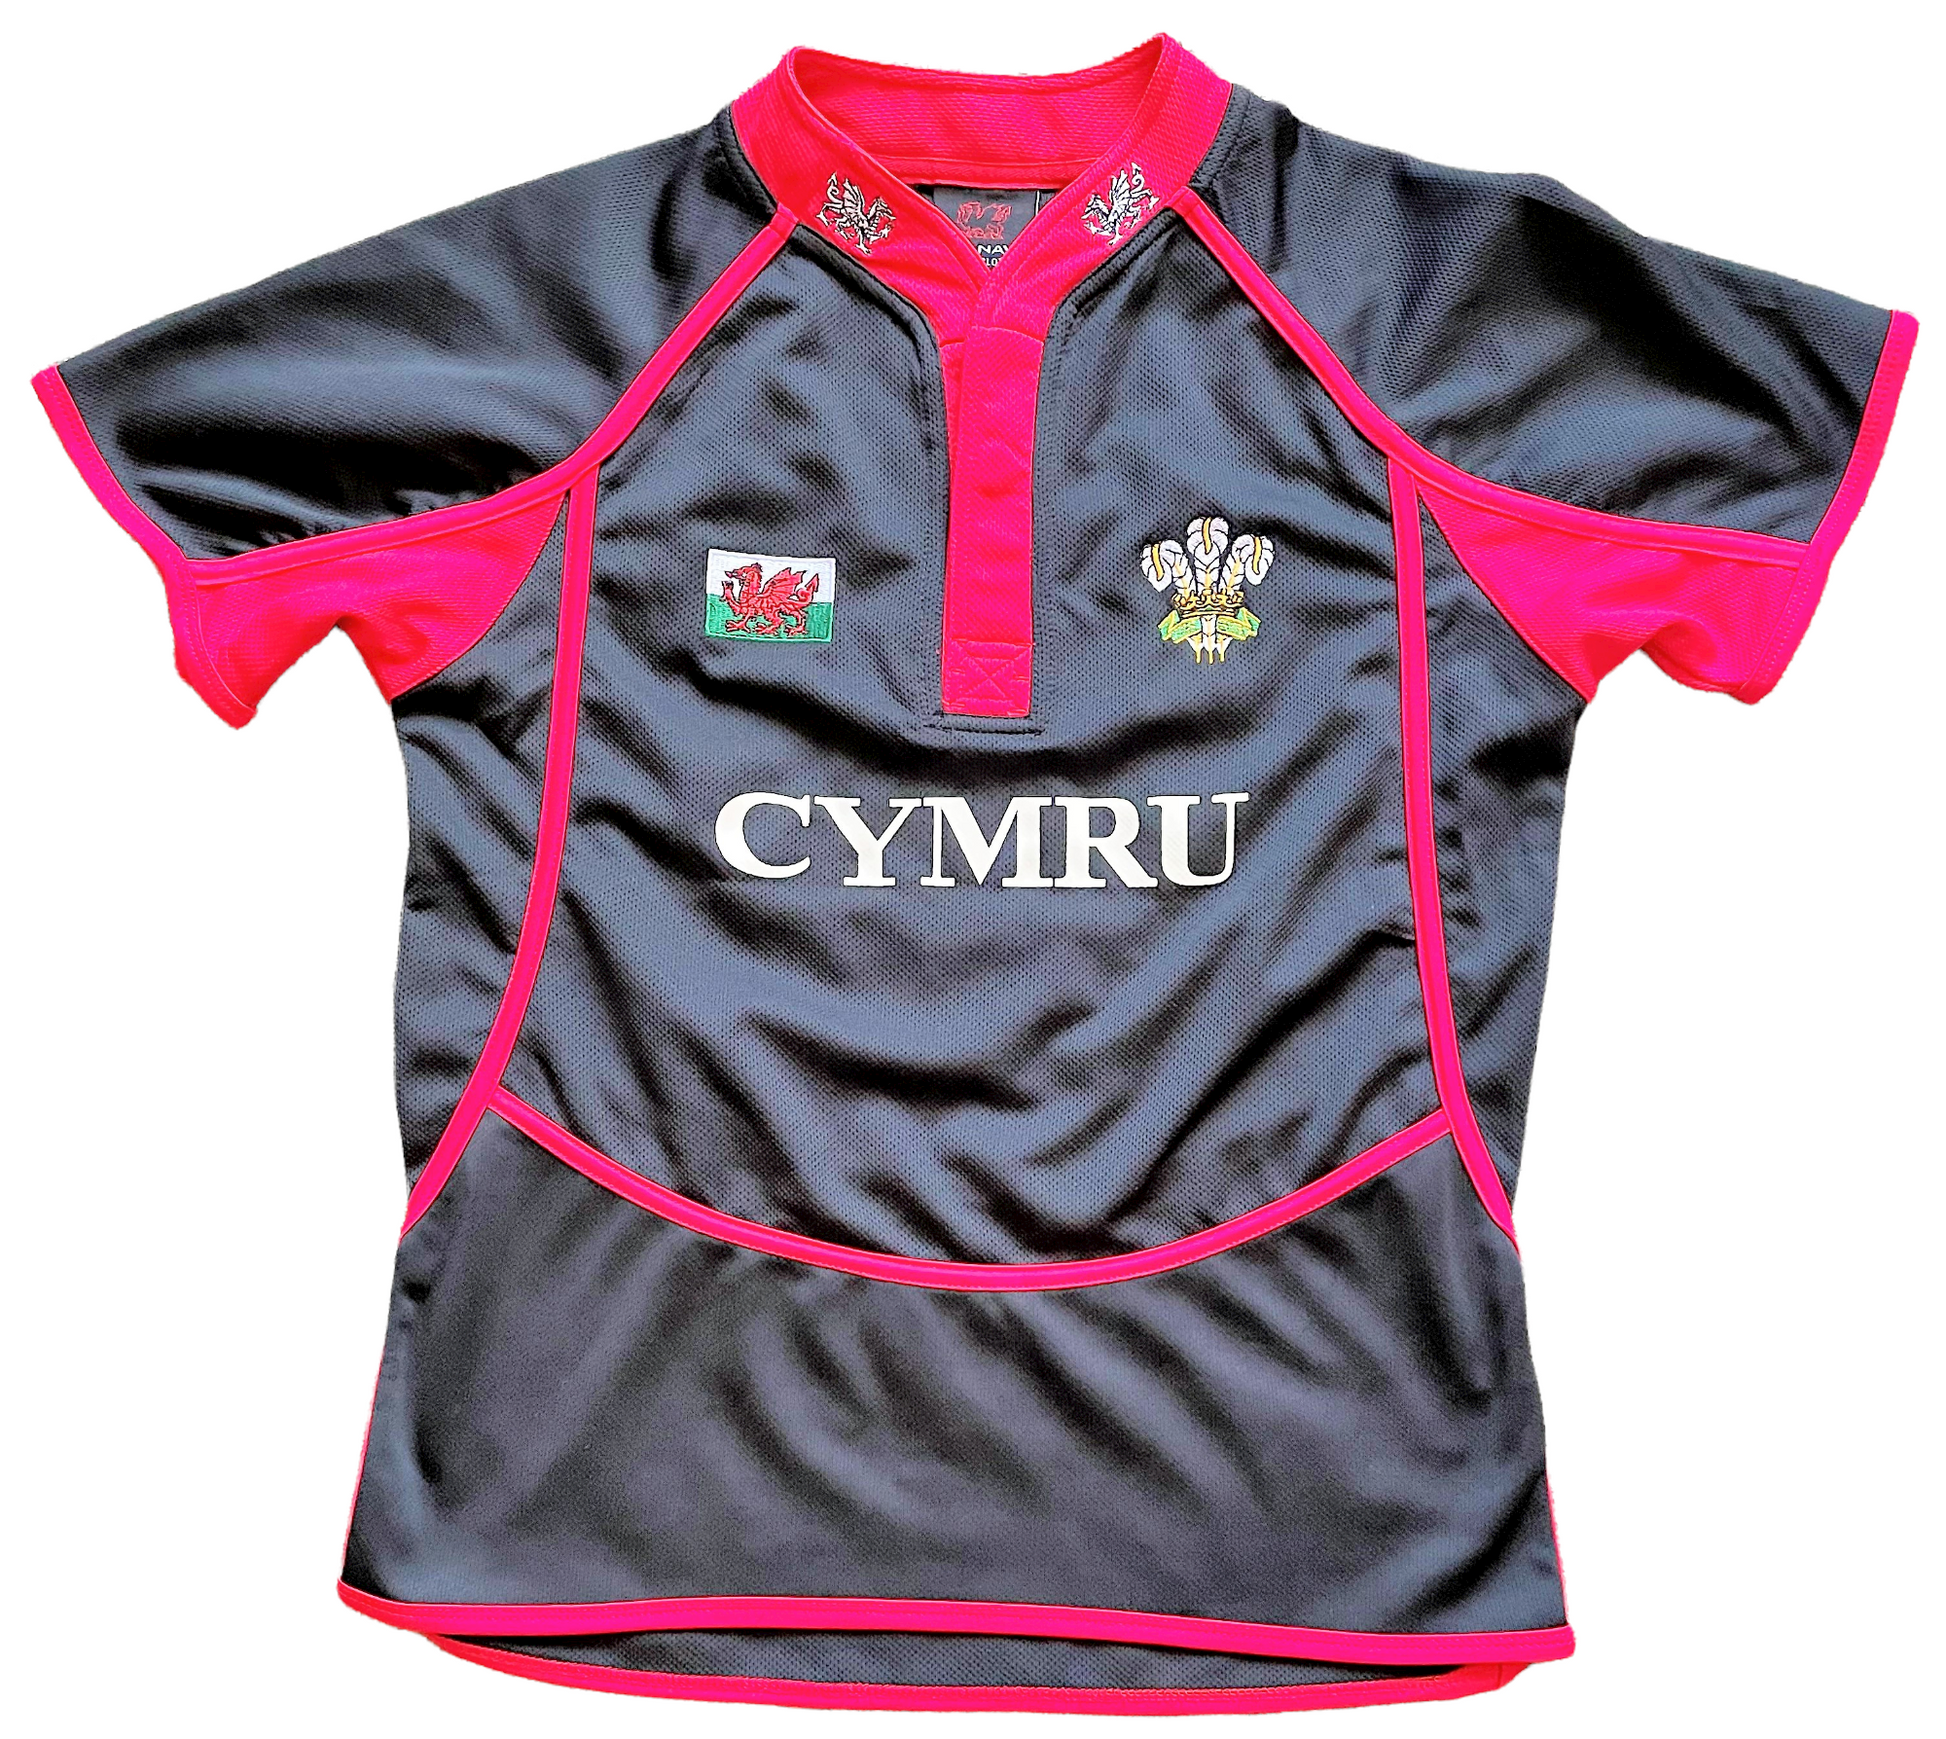 Wales Rugby Fan Shirt CYMRU (excellent) Large Boys.